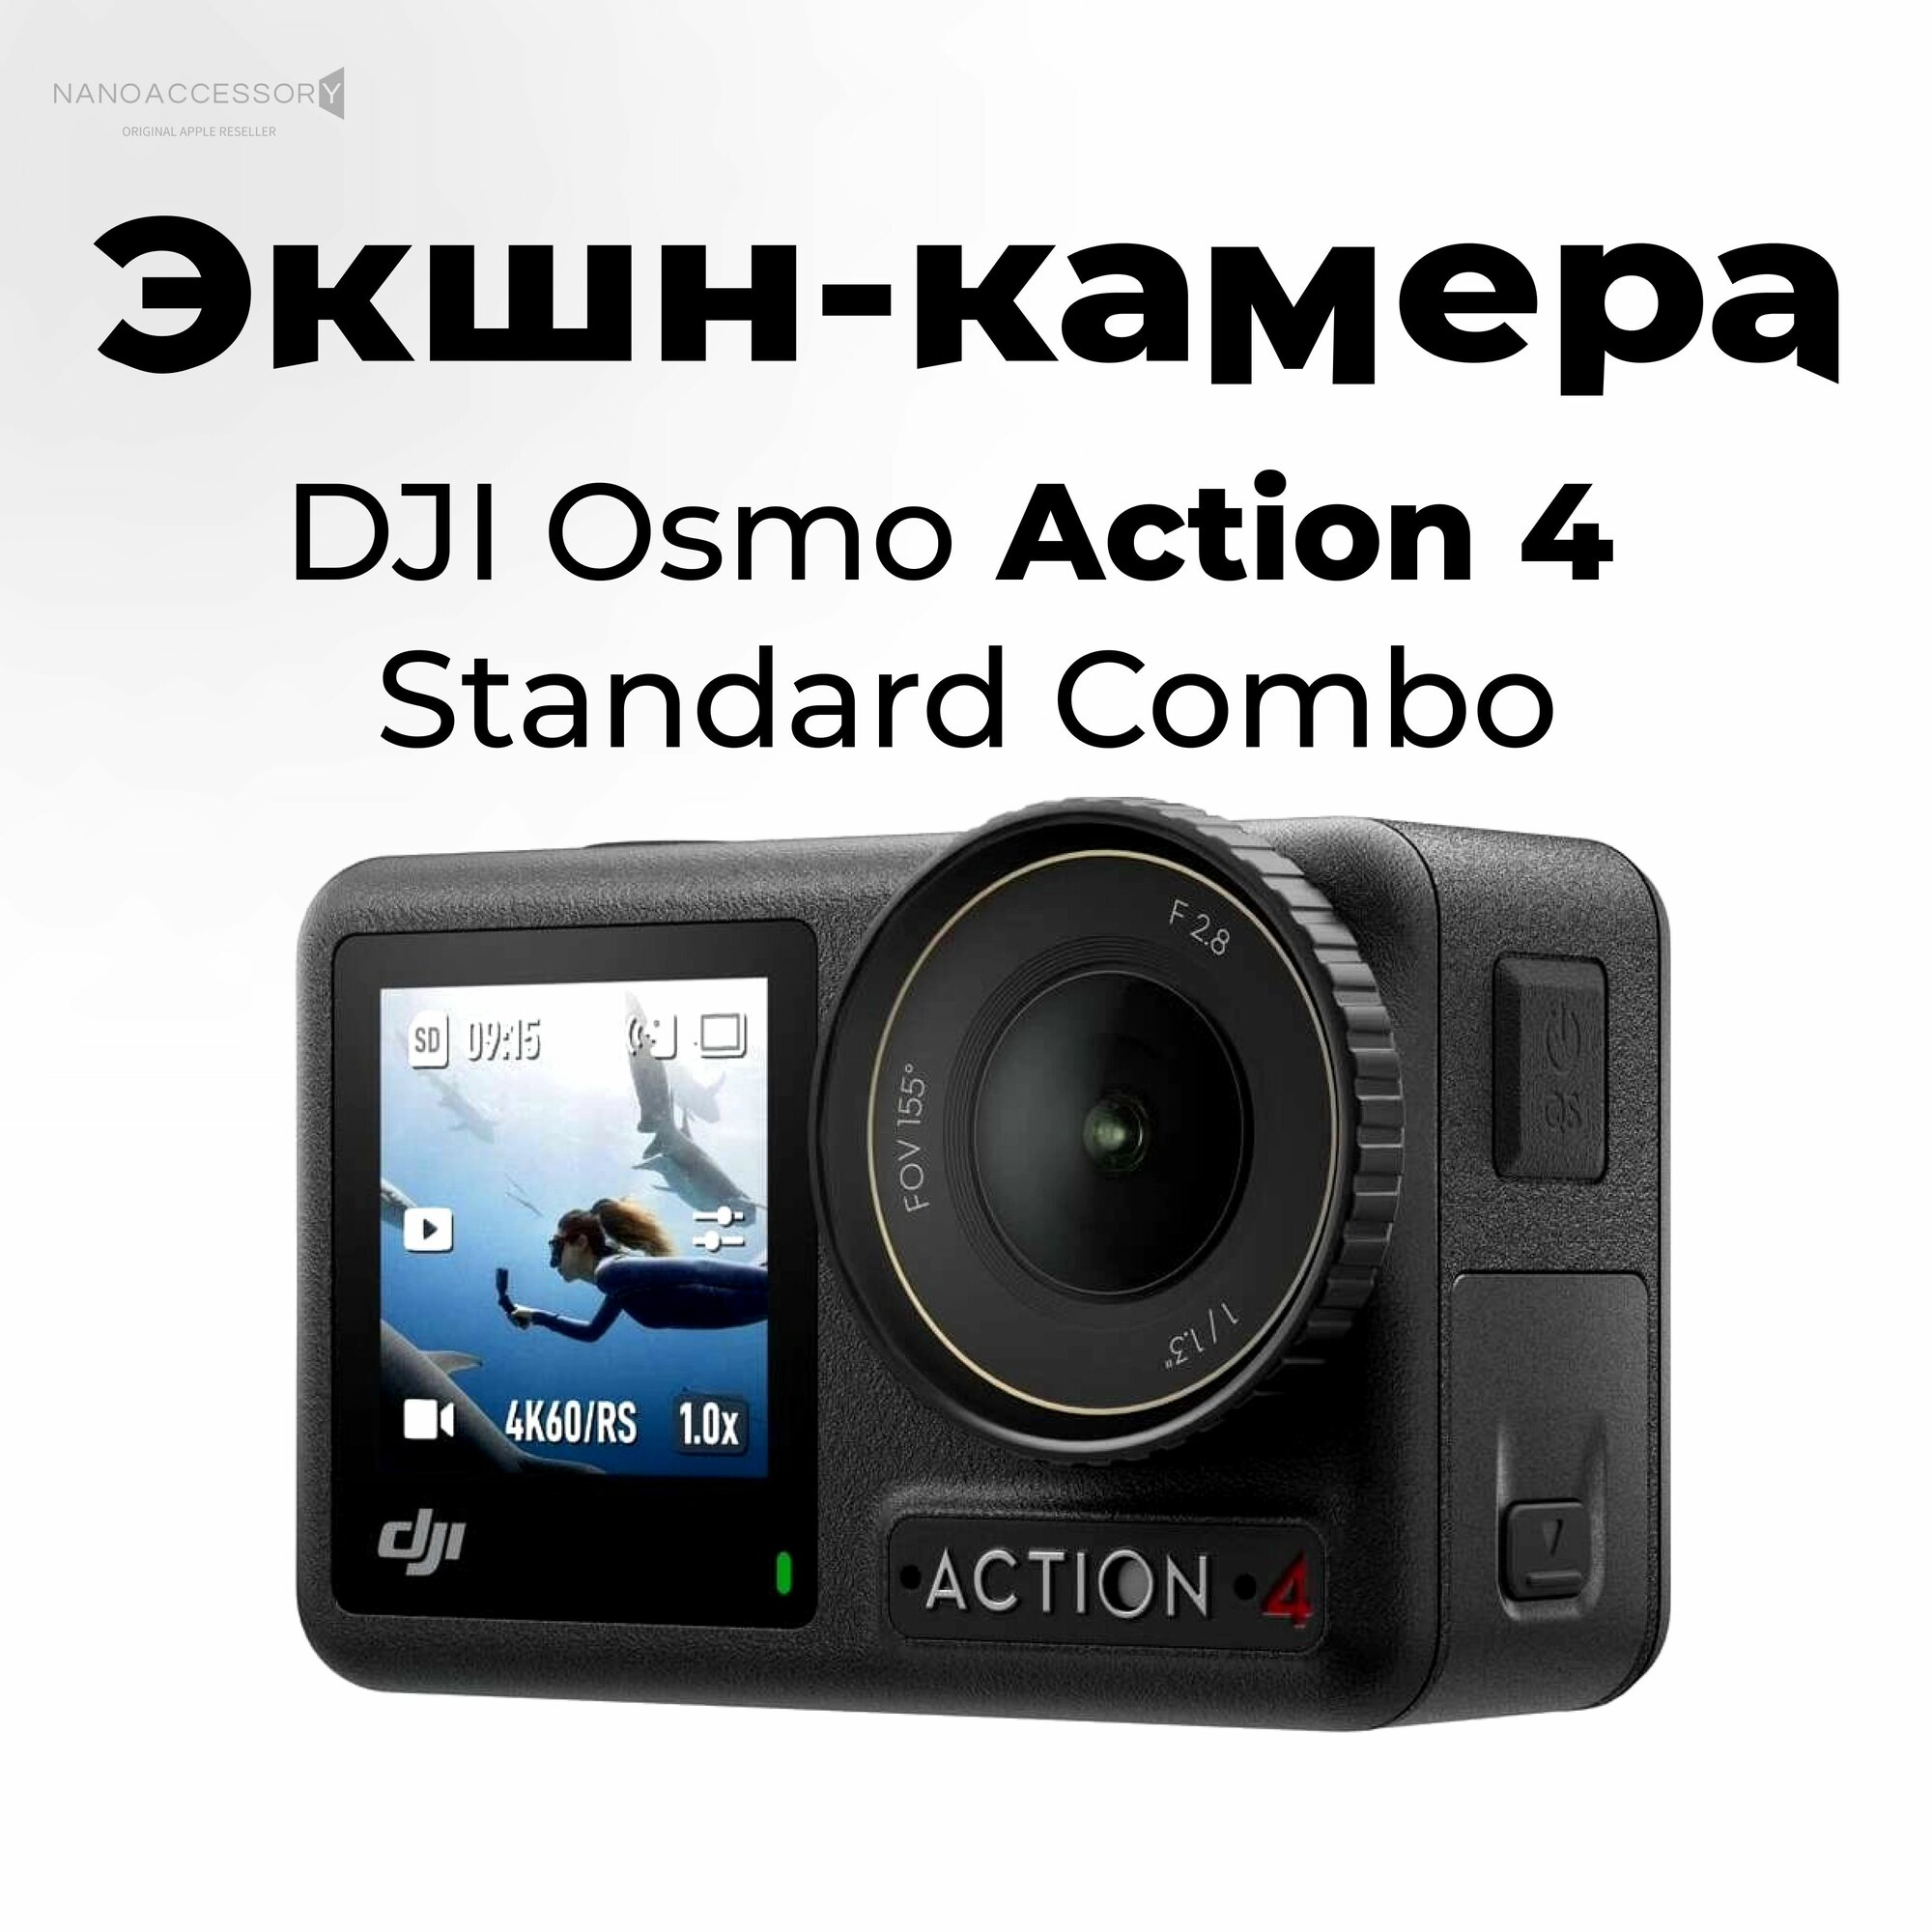 DJI Экшн-камера Osmo Action 4 Standard Combo. Спортивная камера, подходит для Vlog.